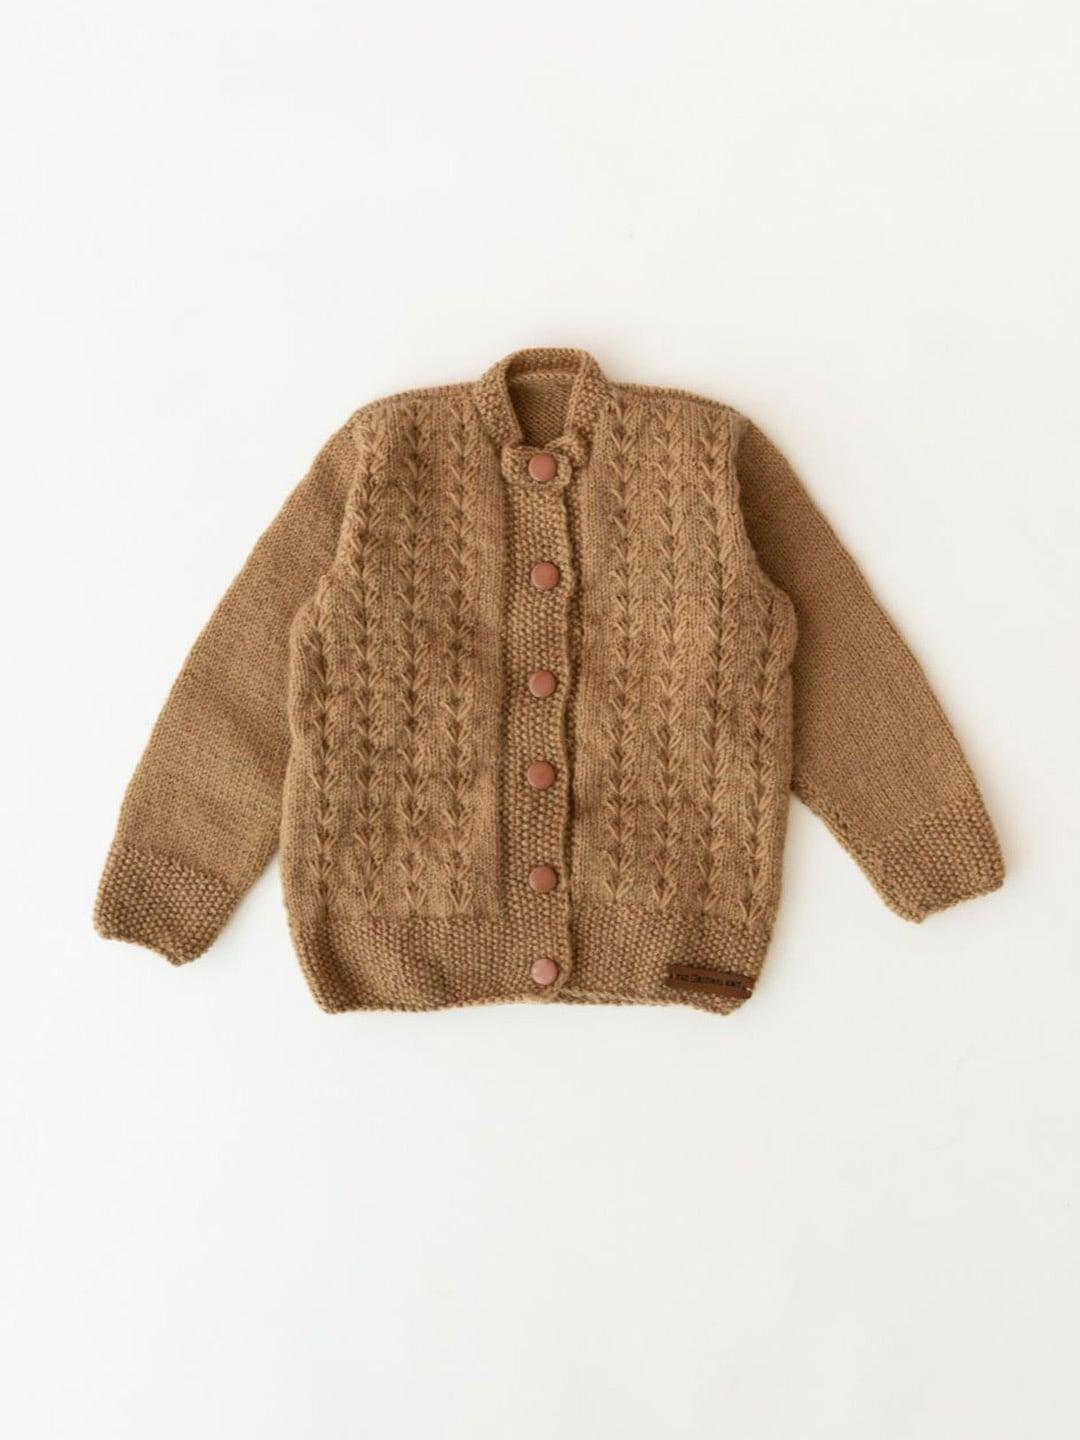 the original knit unisex kids beige cable knit cardigan